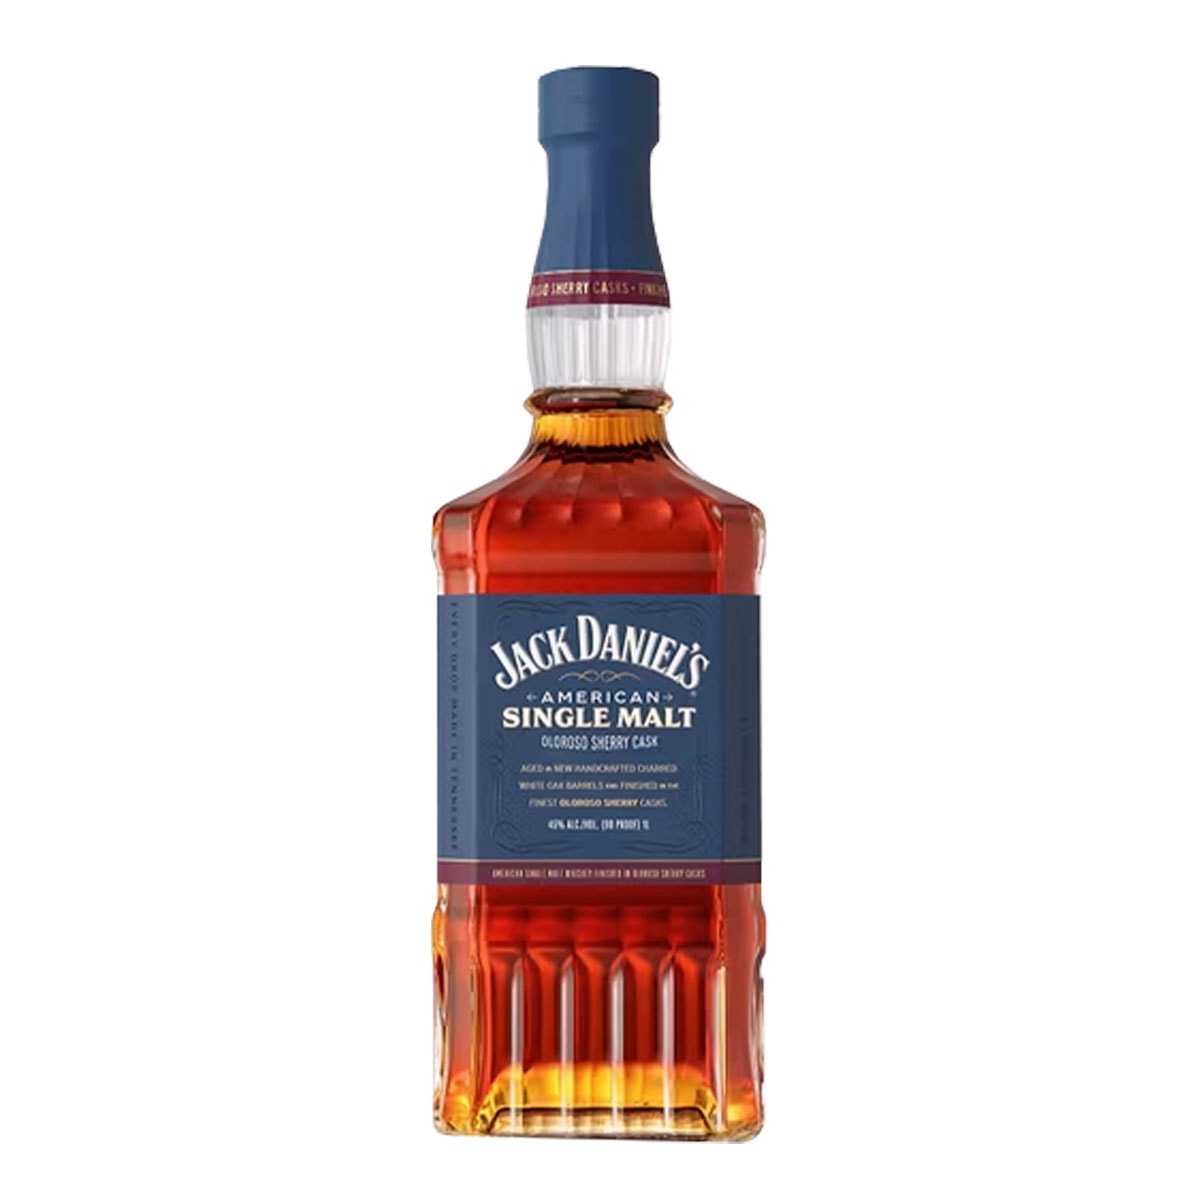 Jack Daniel's American envejecido Barricas de Jerez/Sherry cask  1 L